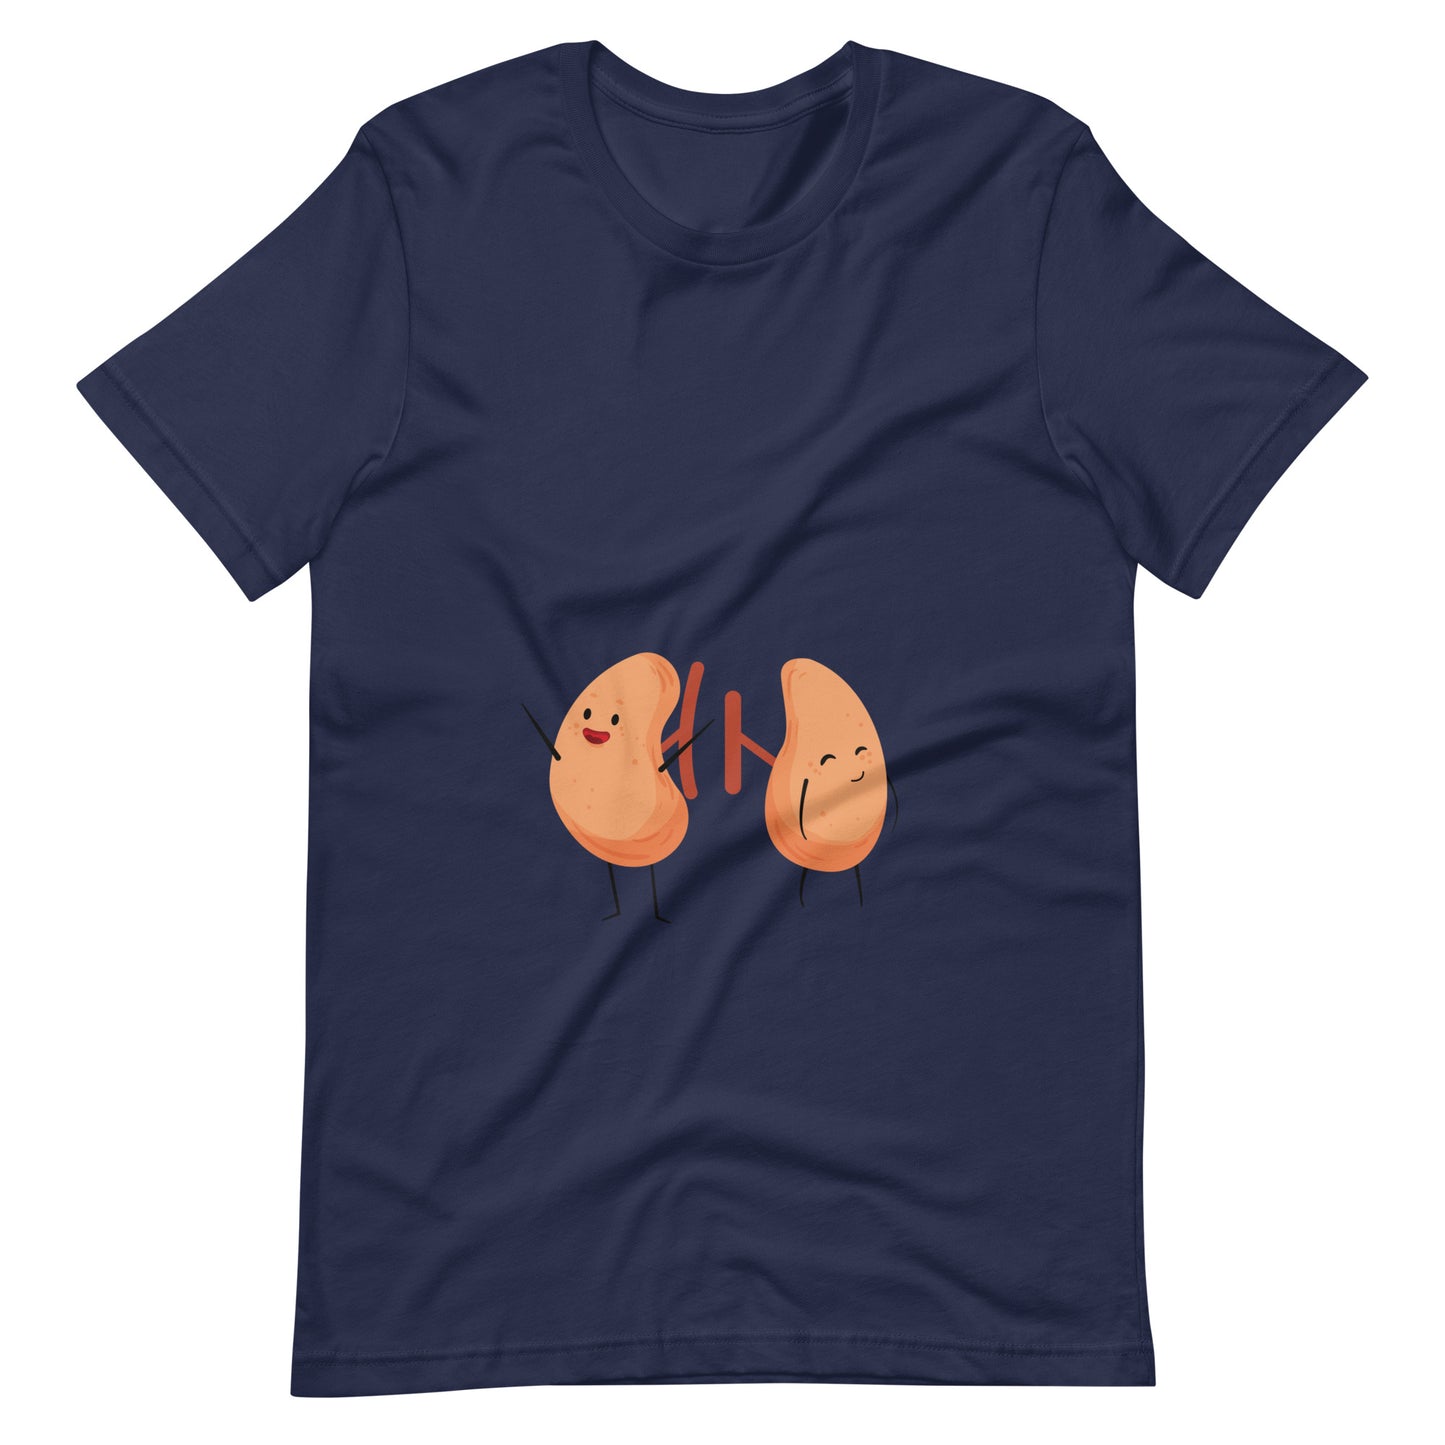 Happy Kidneys